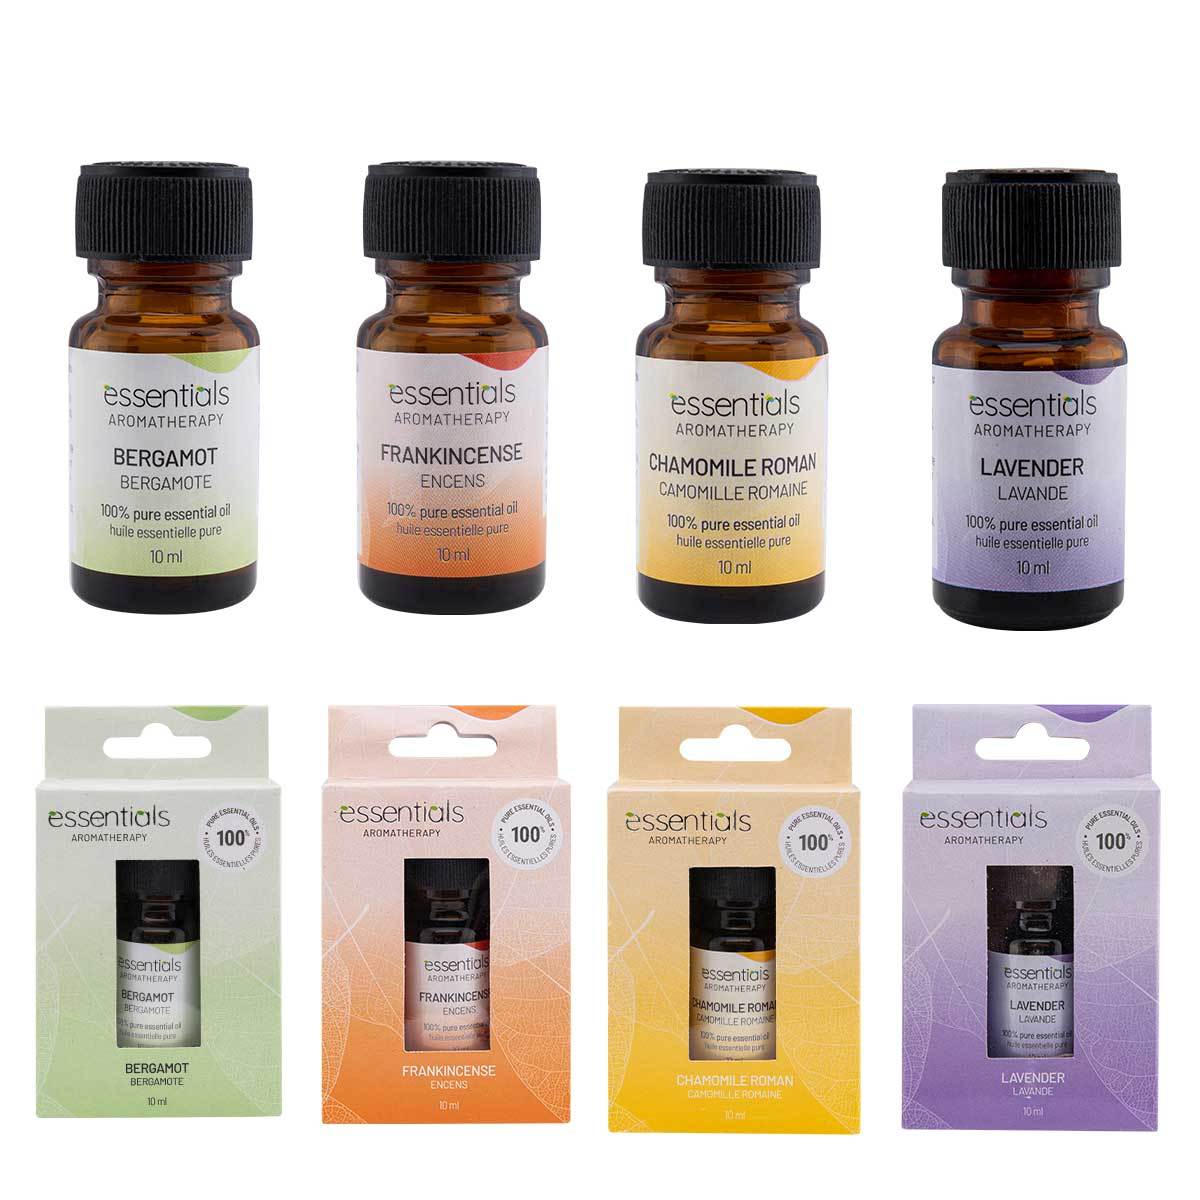 Pranarom pranarom - frankincense essential oil (15ml) - 100% pure natural therapeutic  grade essential oil for aromatherapy, meditation